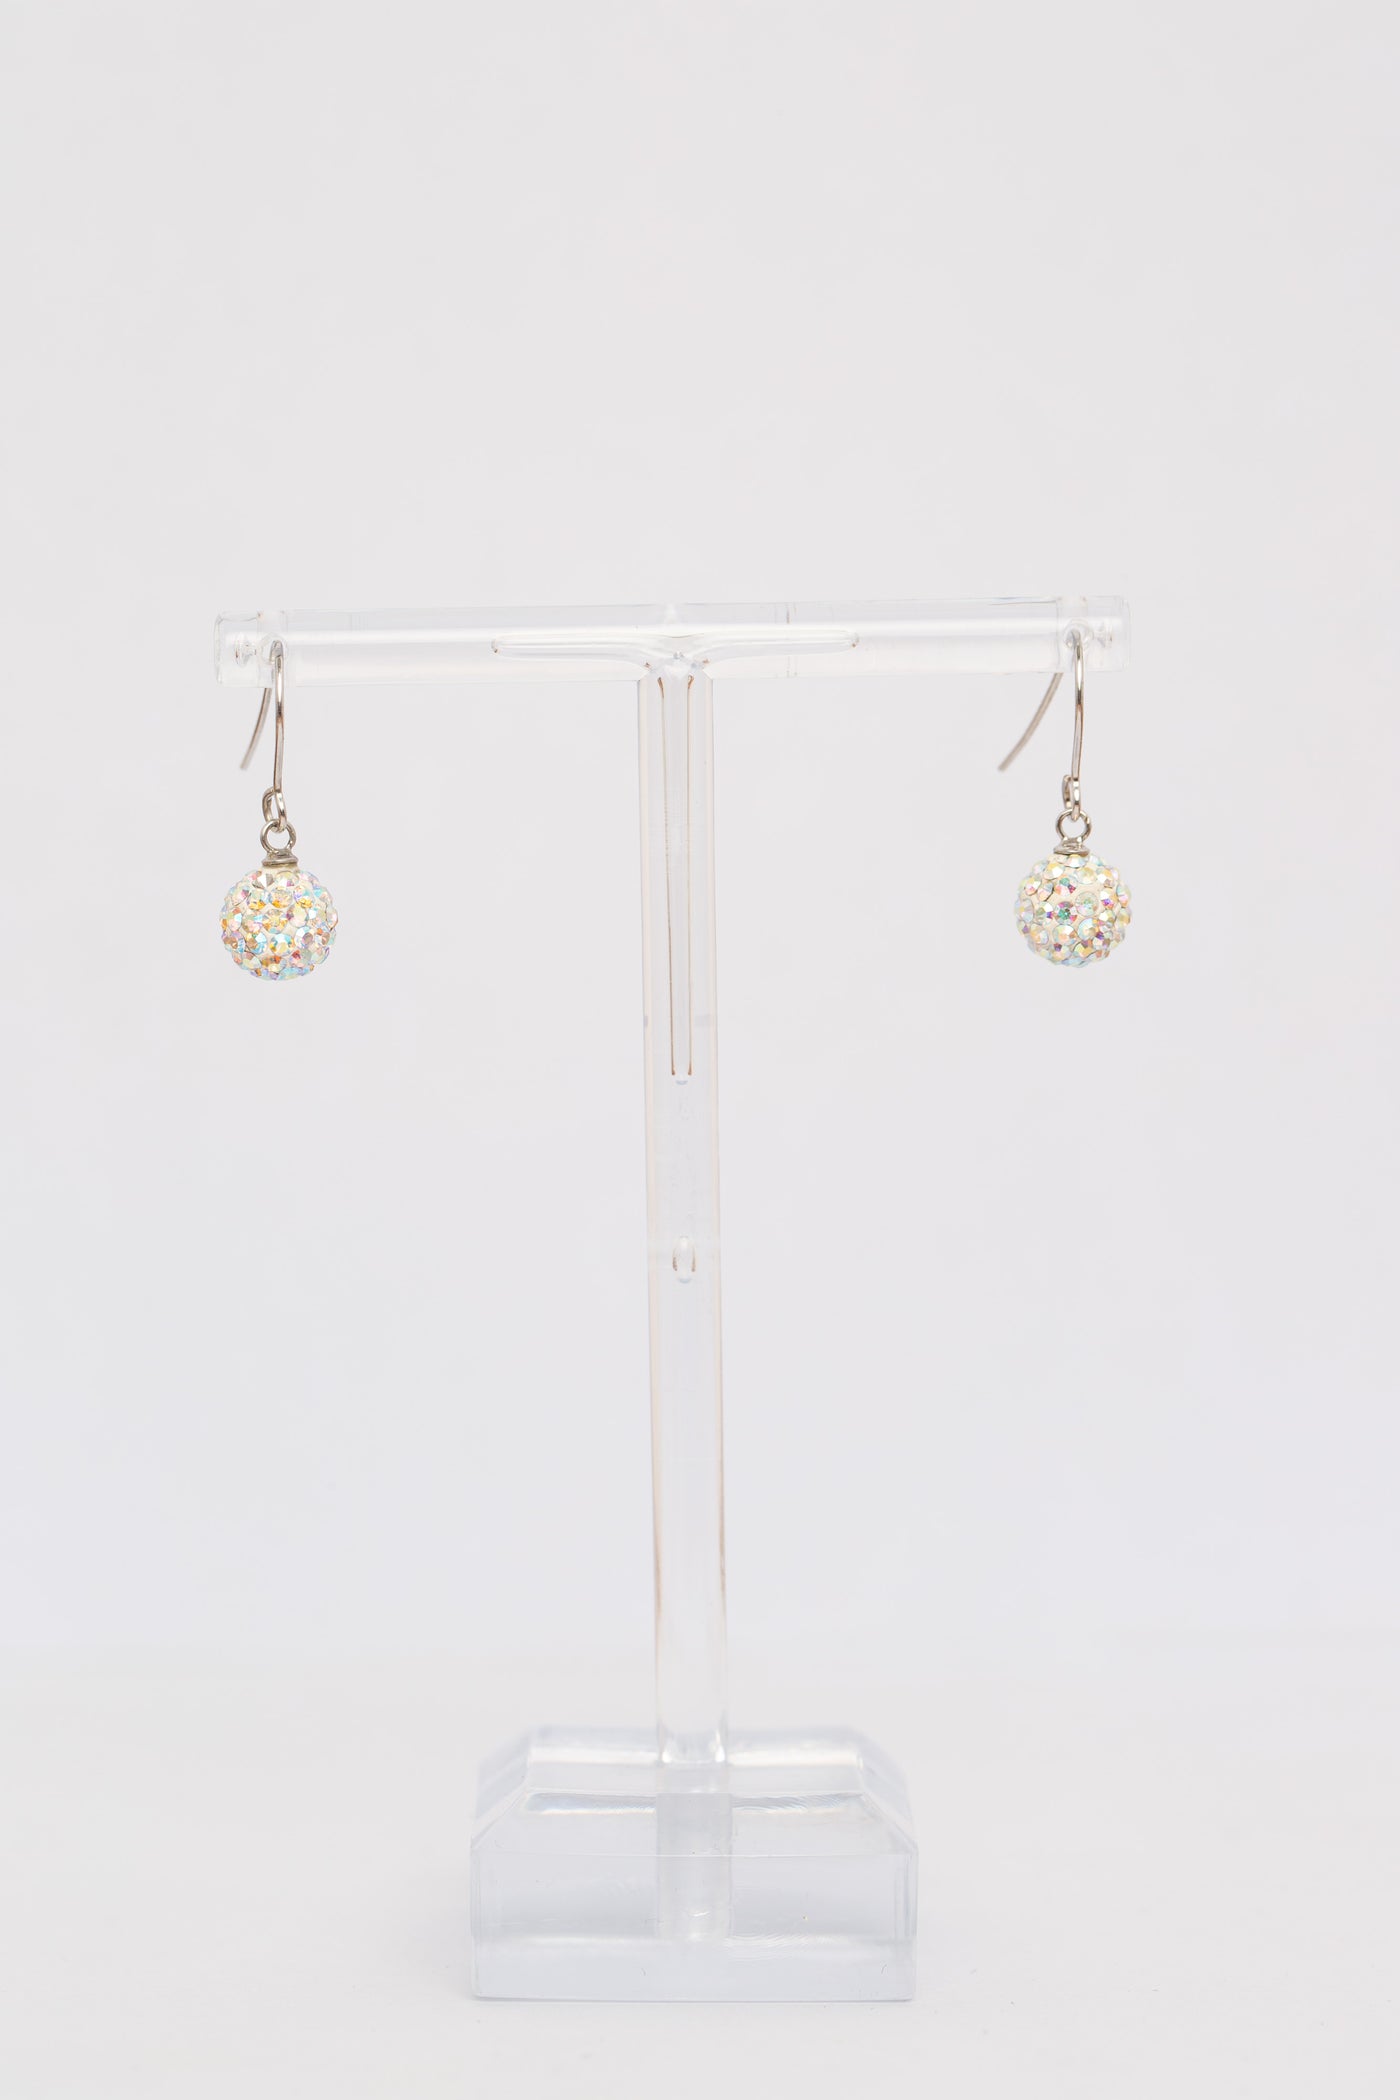 Dangling Disco Ball Crystal Sterling Silver Earrings